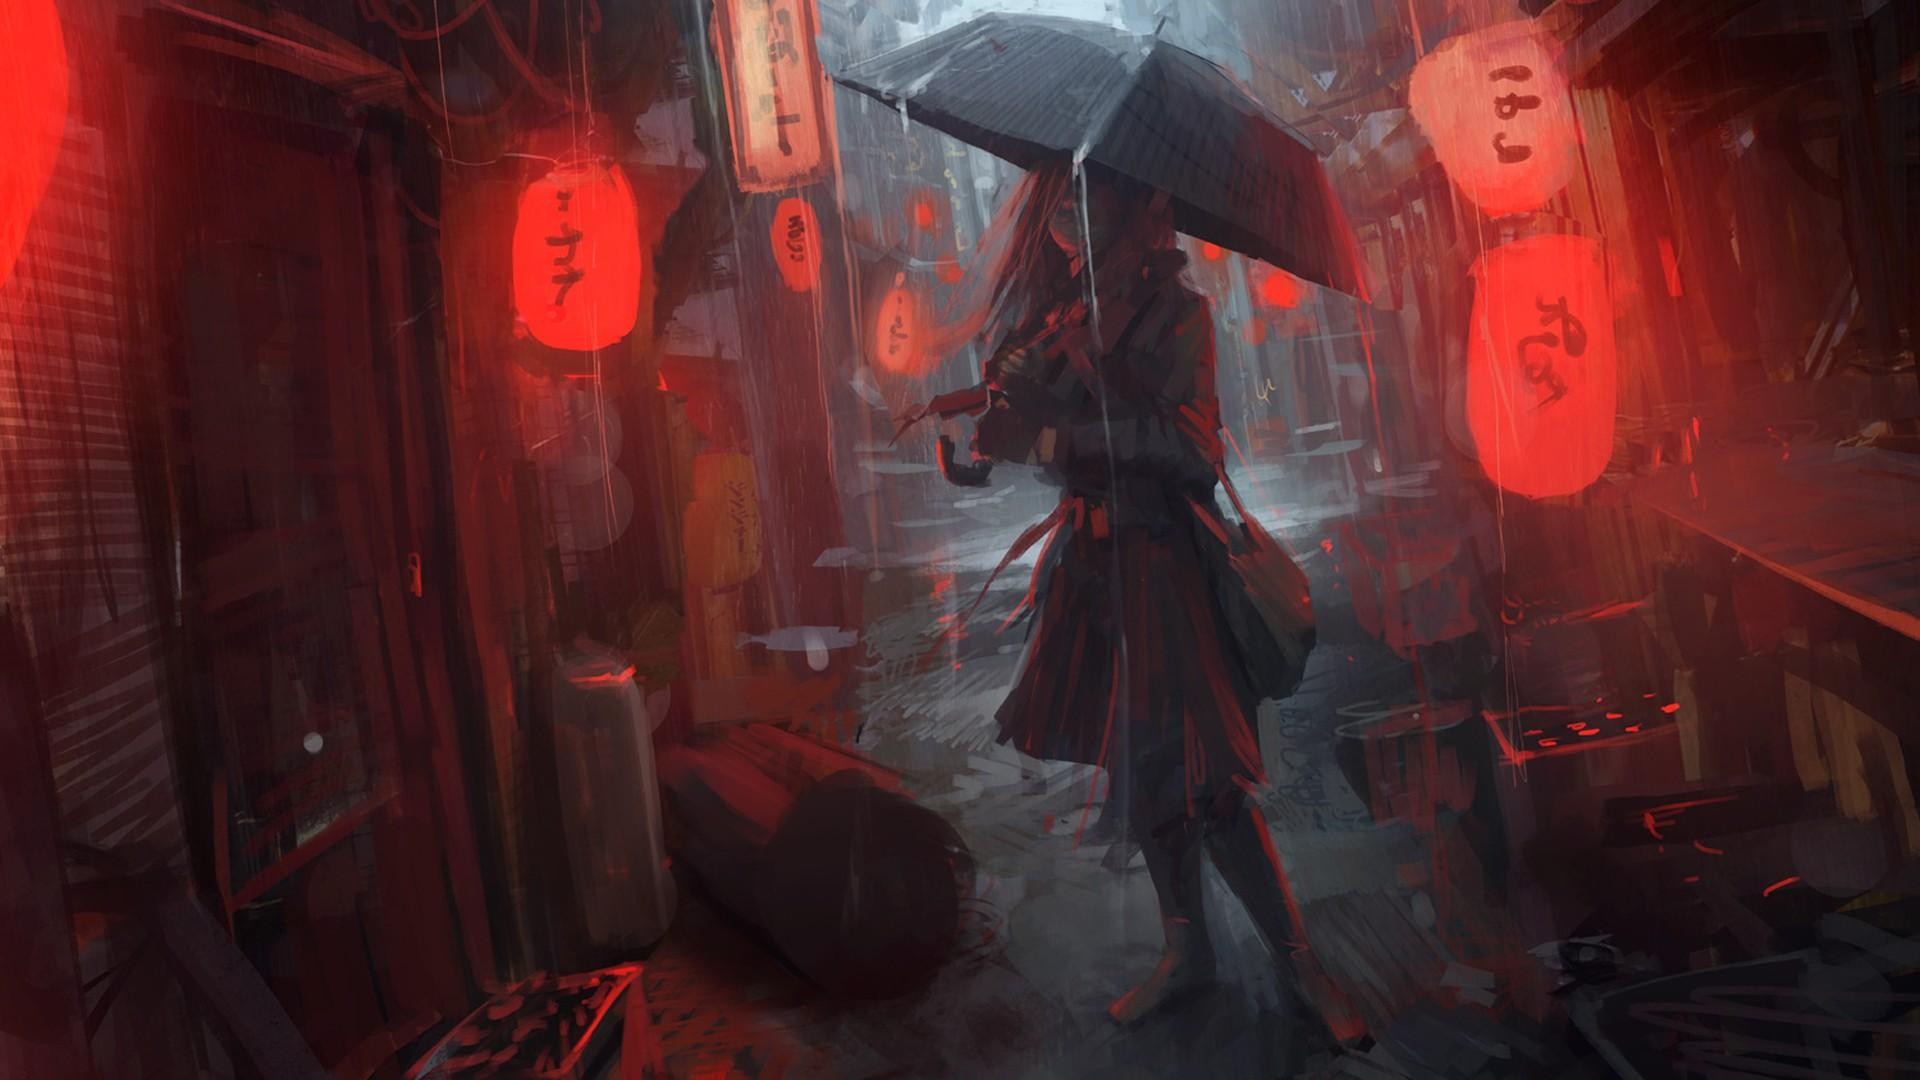 Wallpaper, digital art, cityscape, anime girls, red, rain, artwork, umbrella, lantern, midnight, darkness, screenshot, pc game 1920x1080